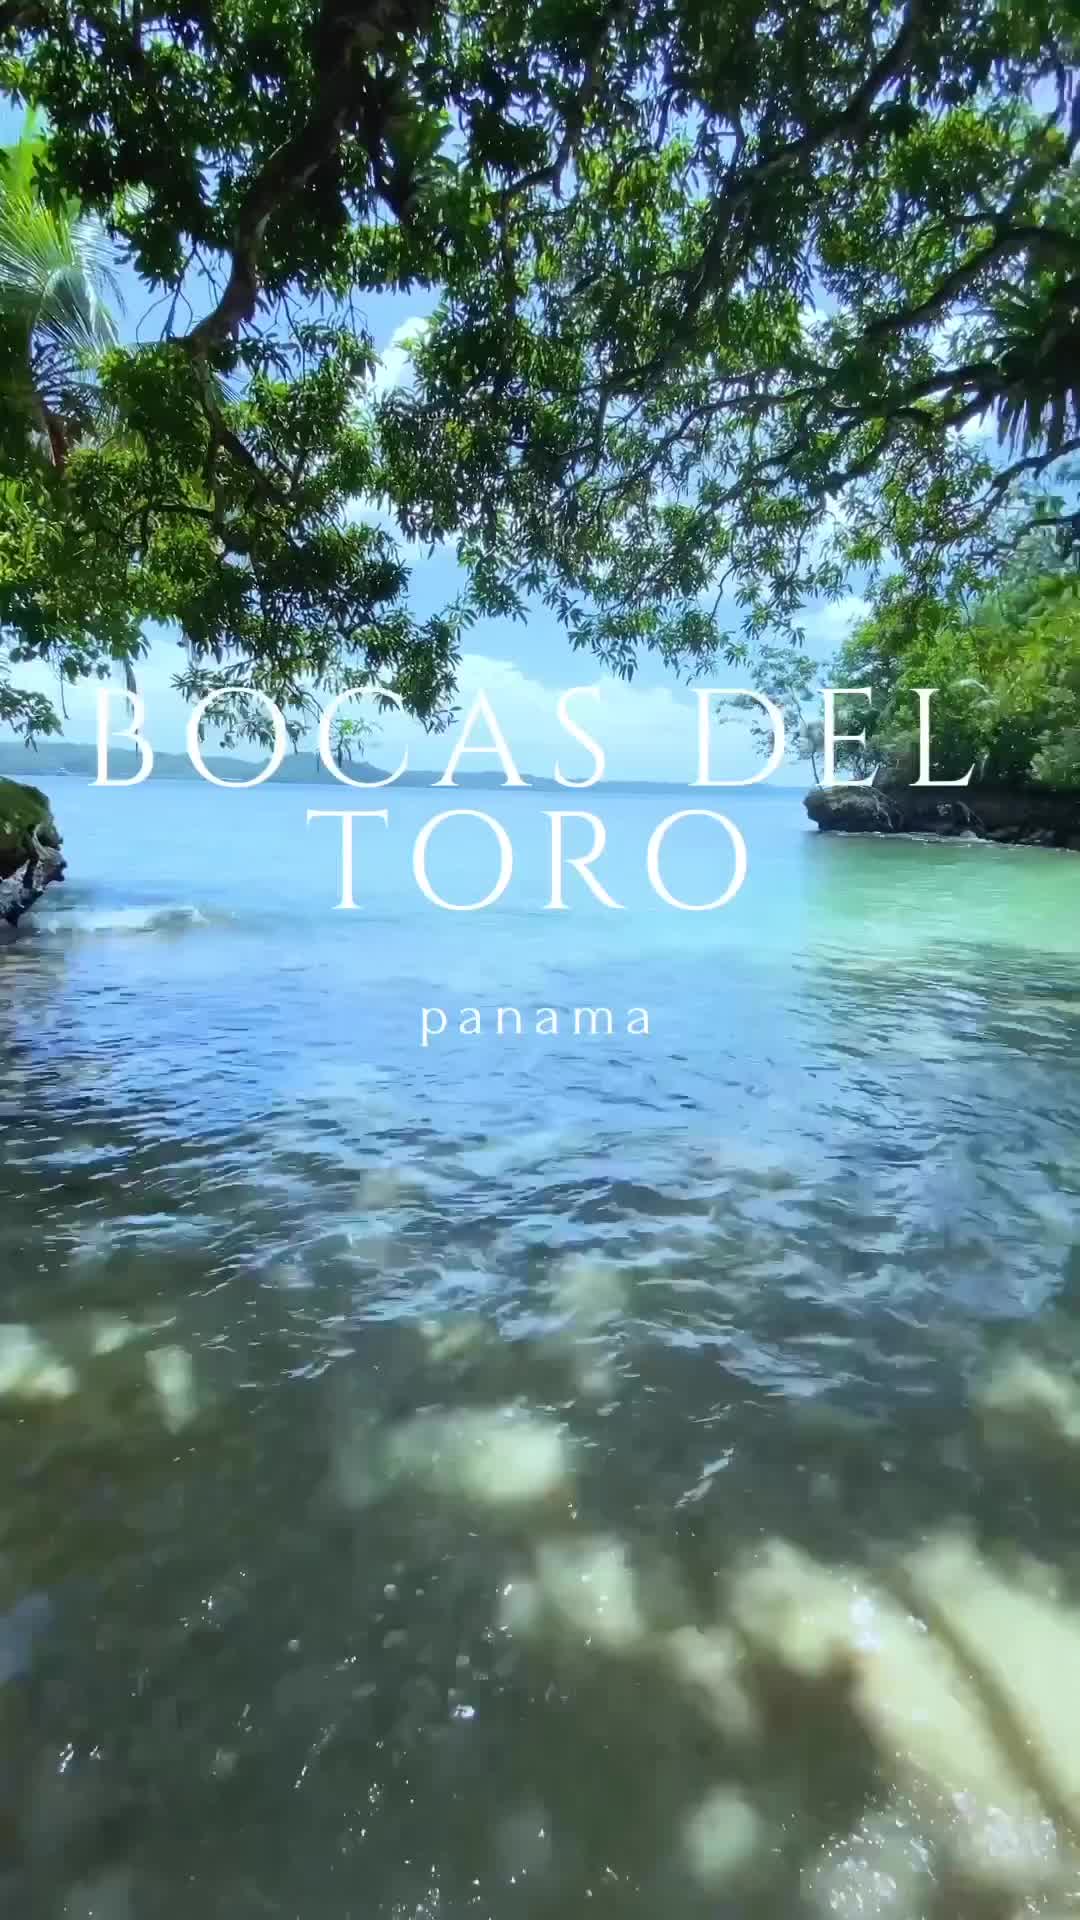 Explore Bocas del Toro: Panama's Caribbean Gem